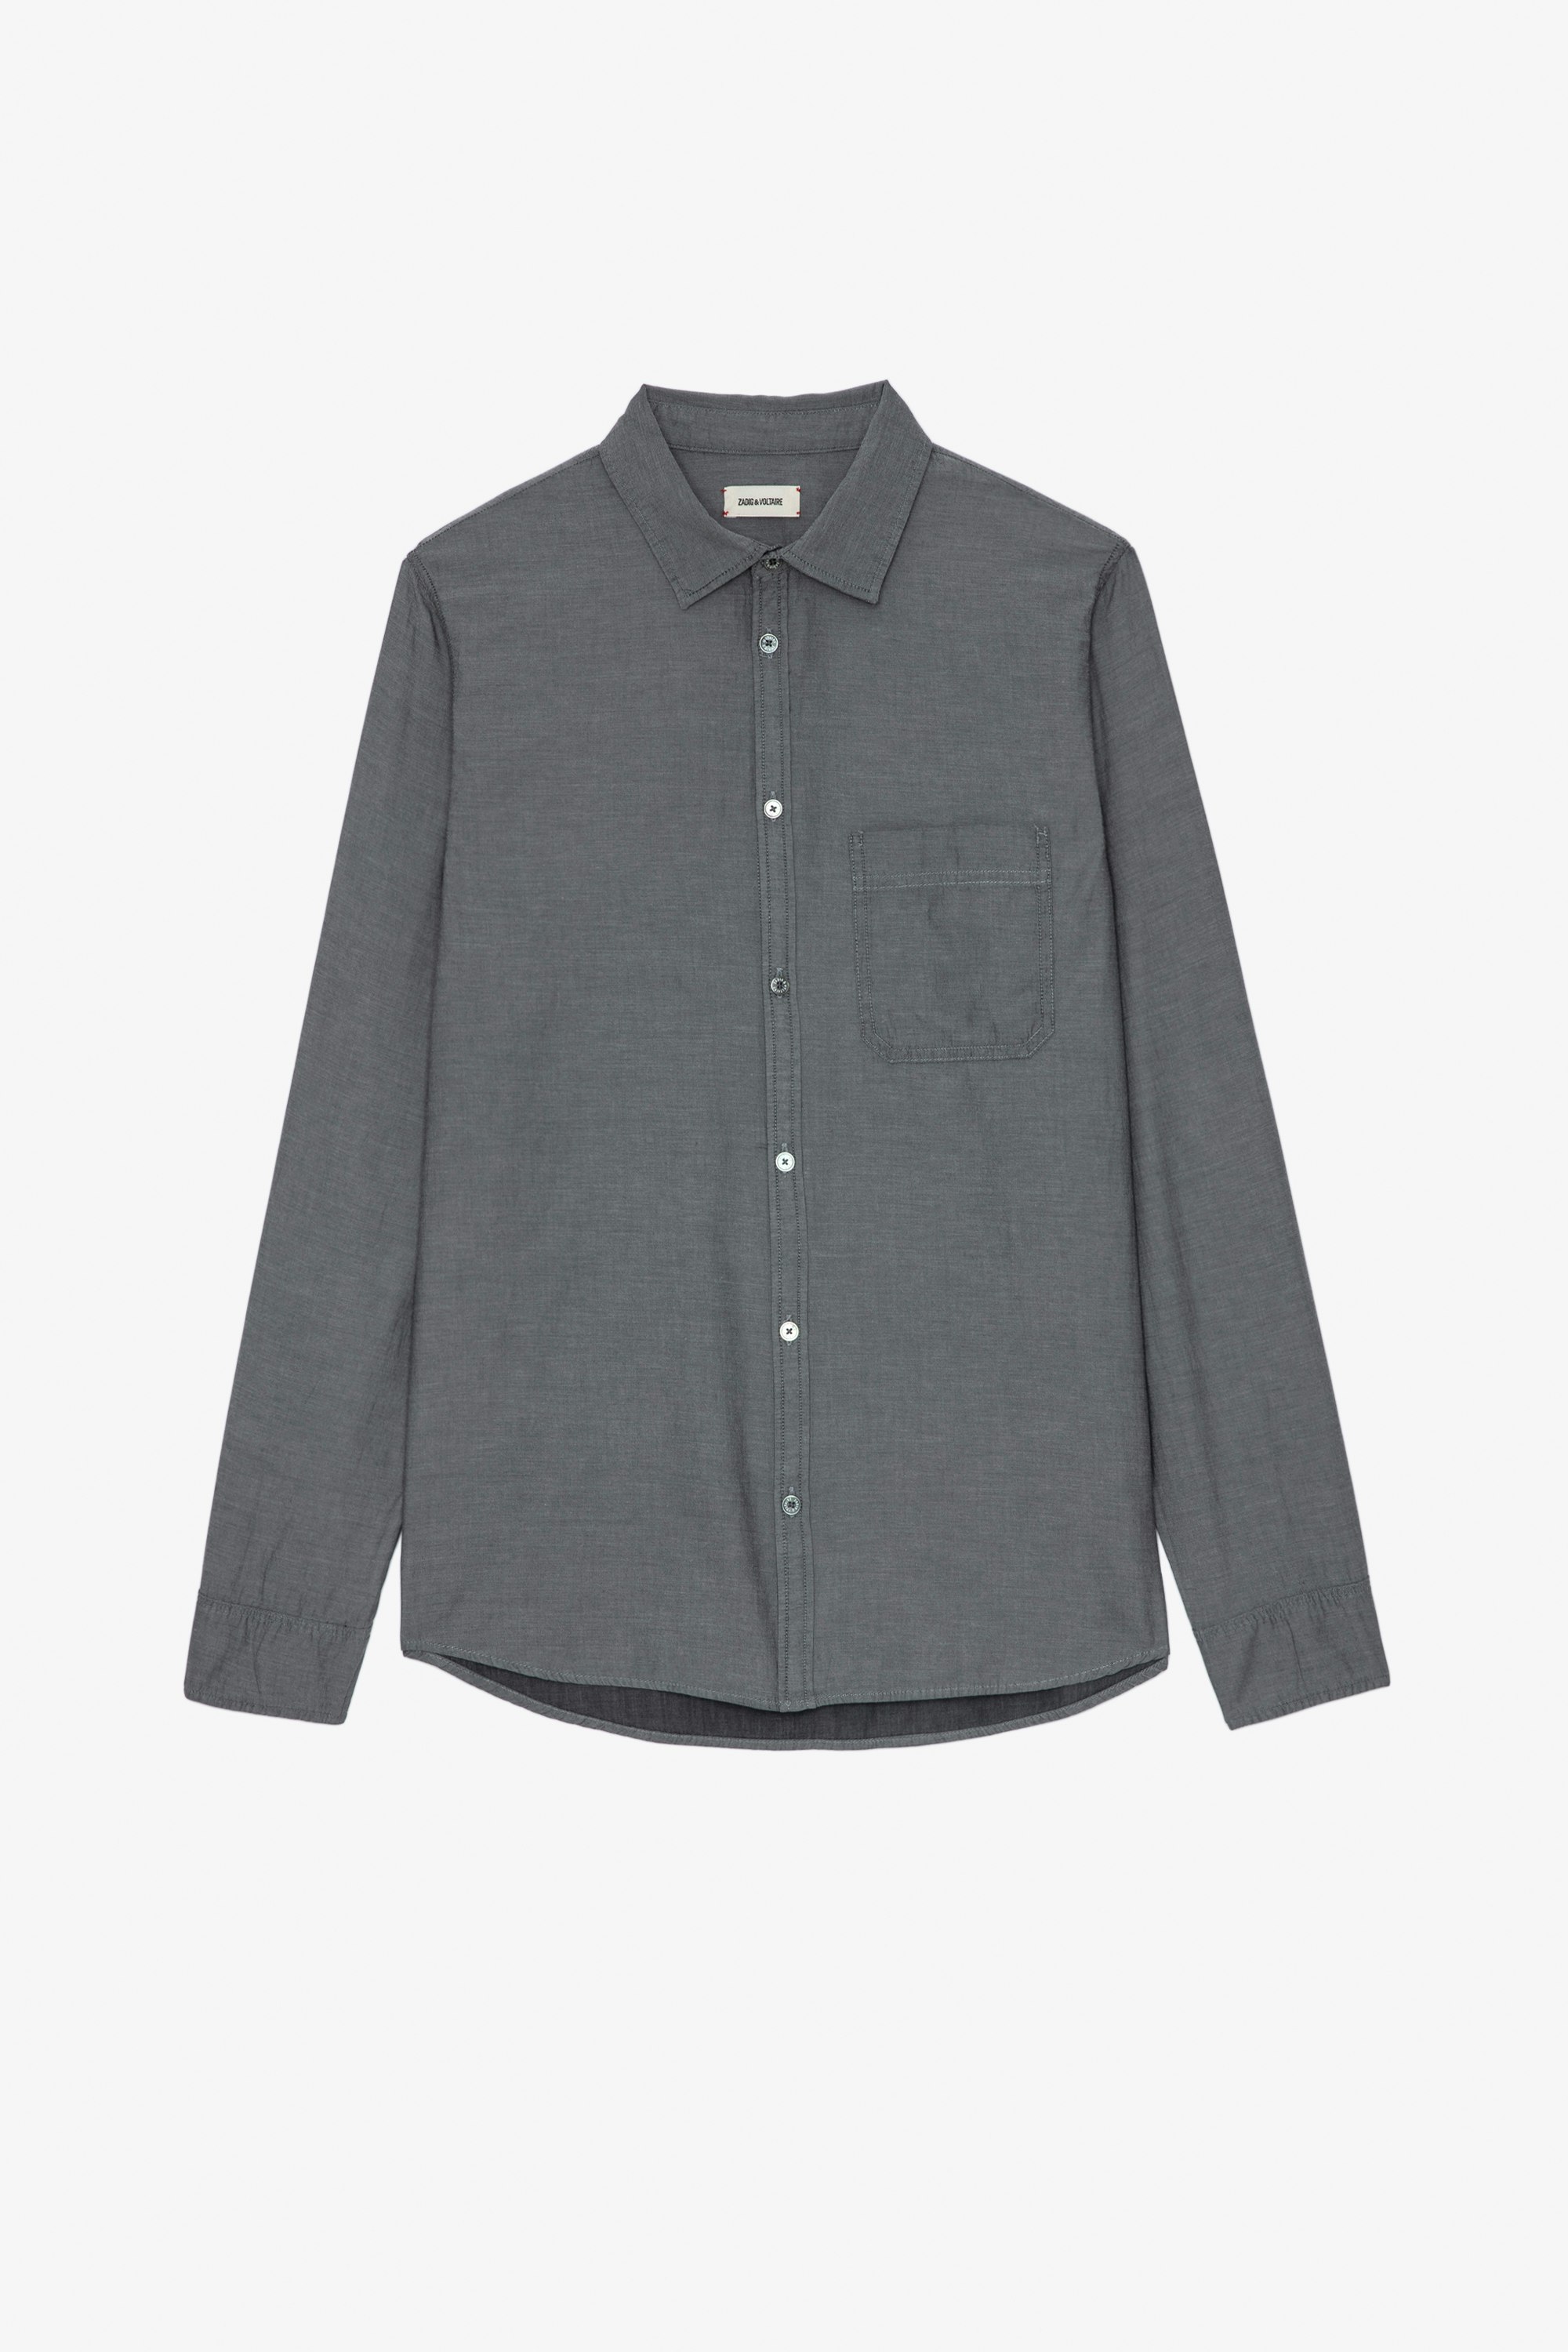 Stan Shirt Men's light grey cotton shirt with palm tree photo print on the back